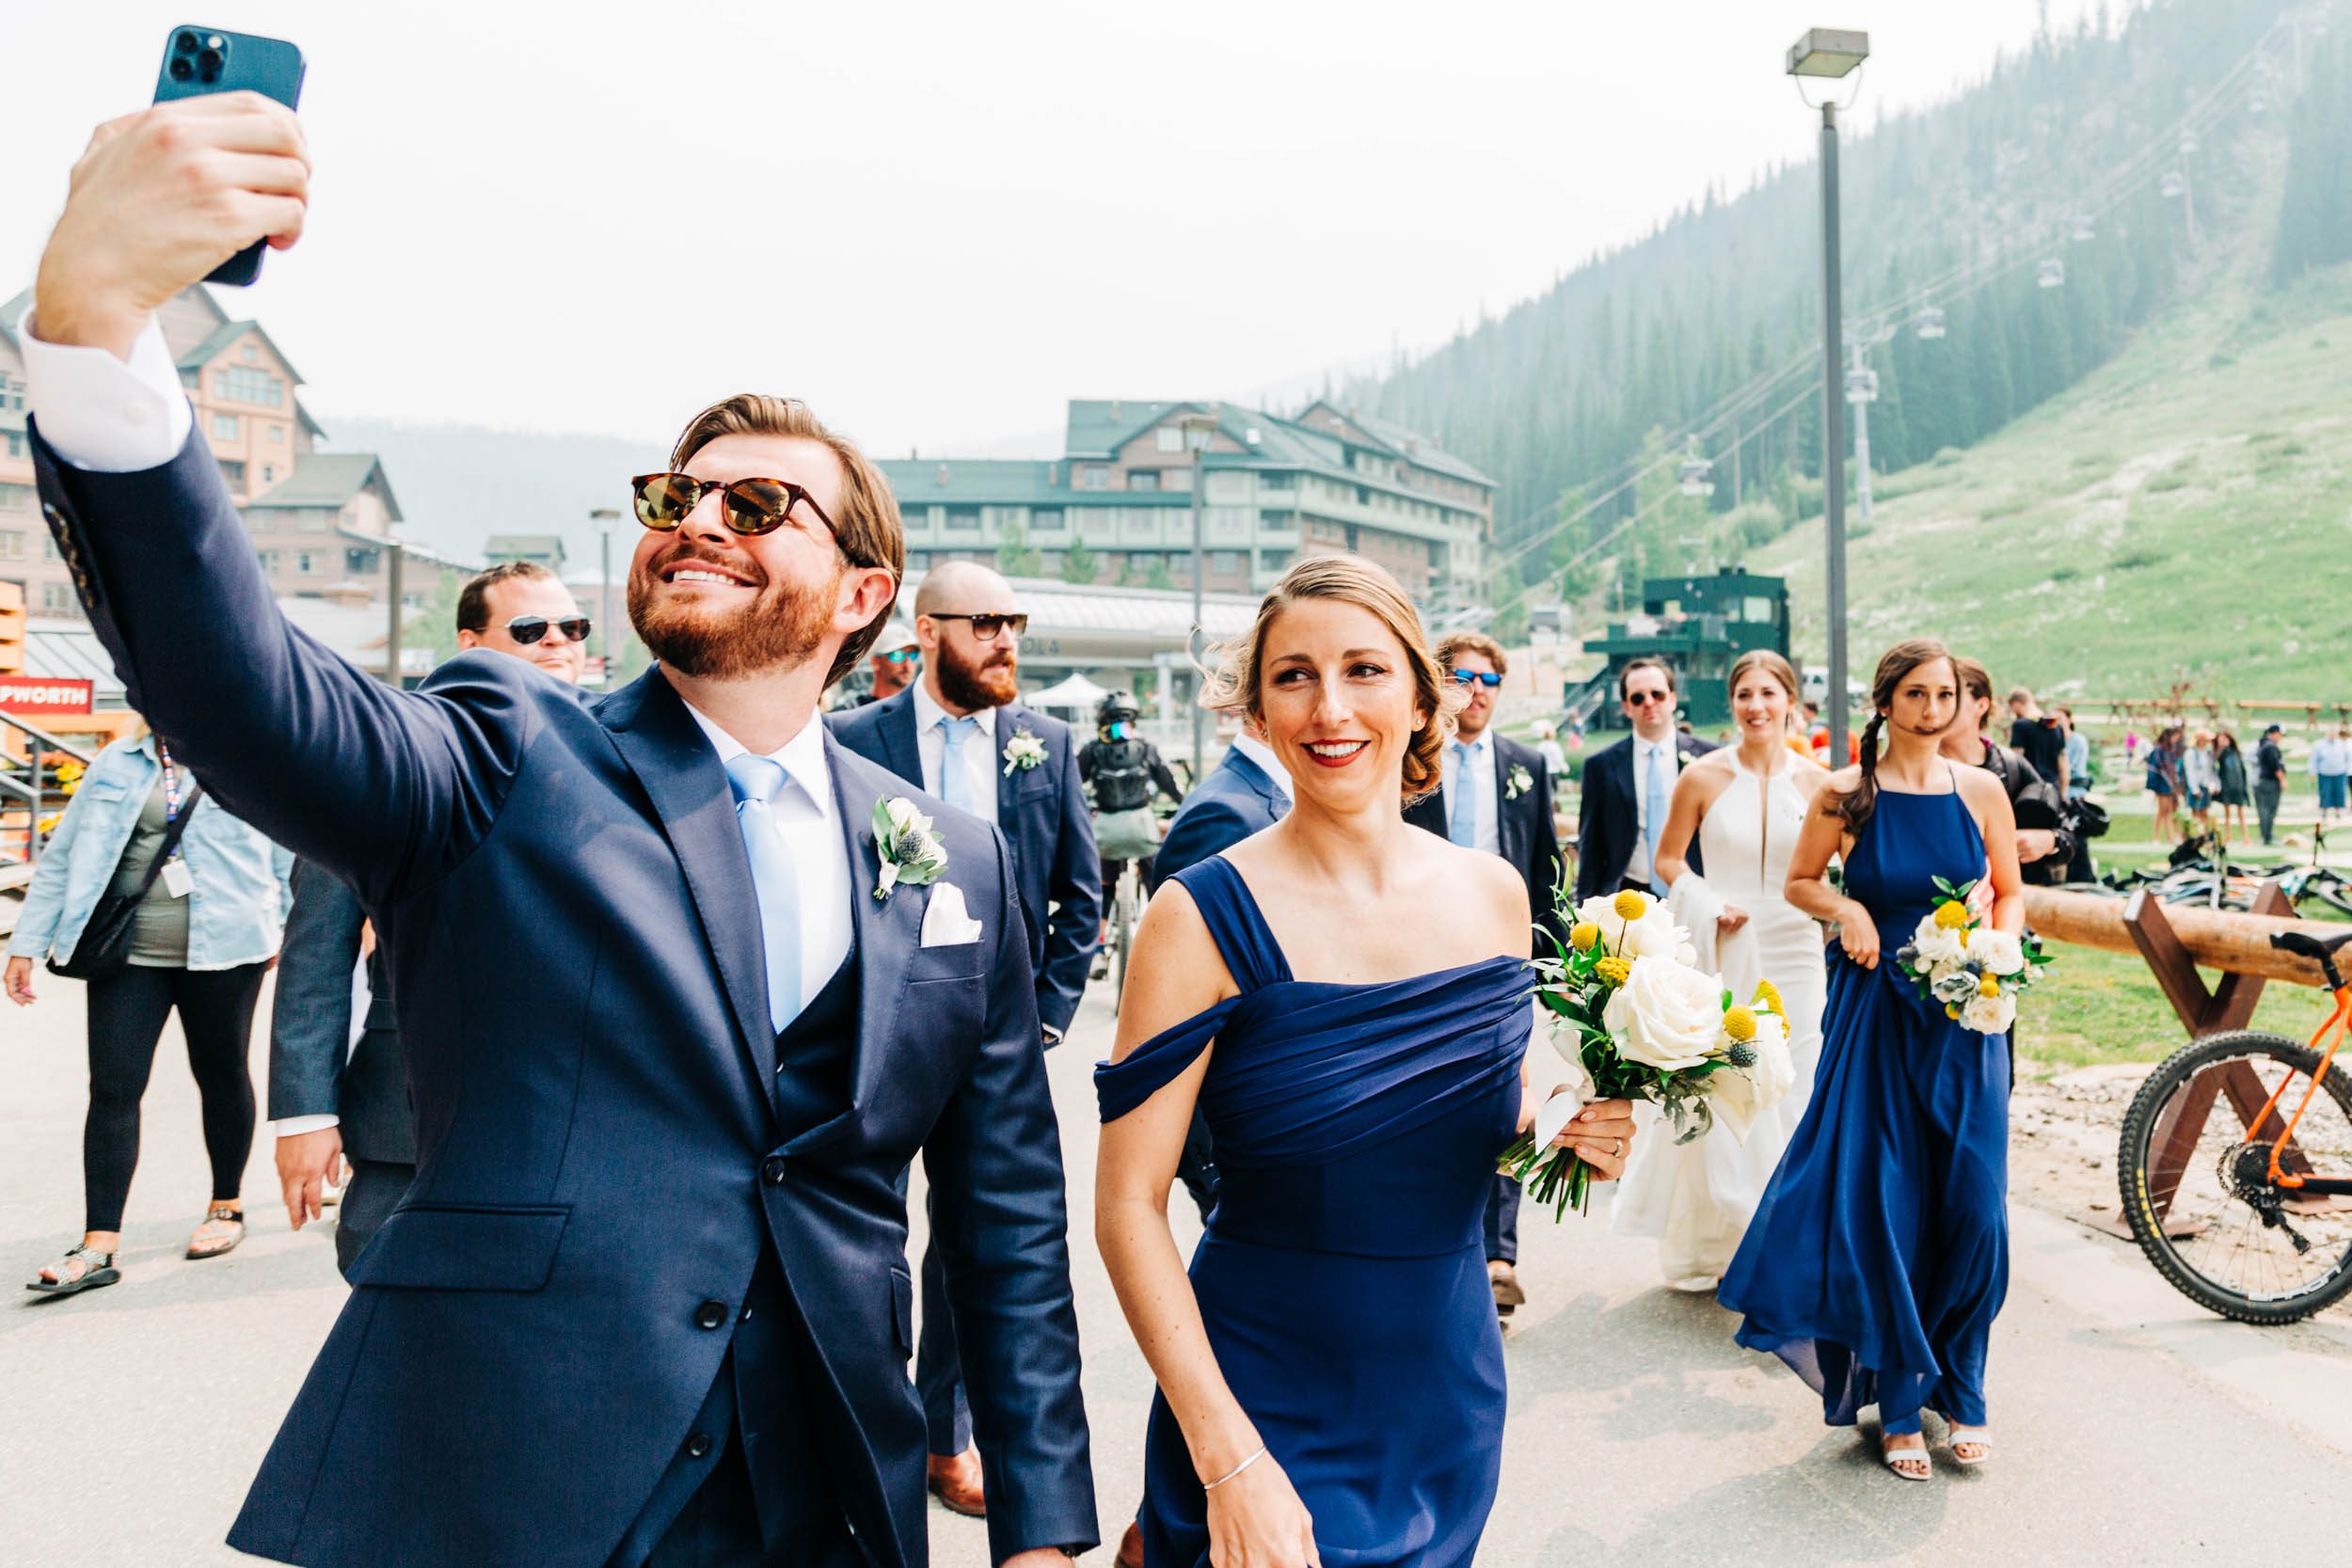 Wedding party walking to ski lift at winter park resort